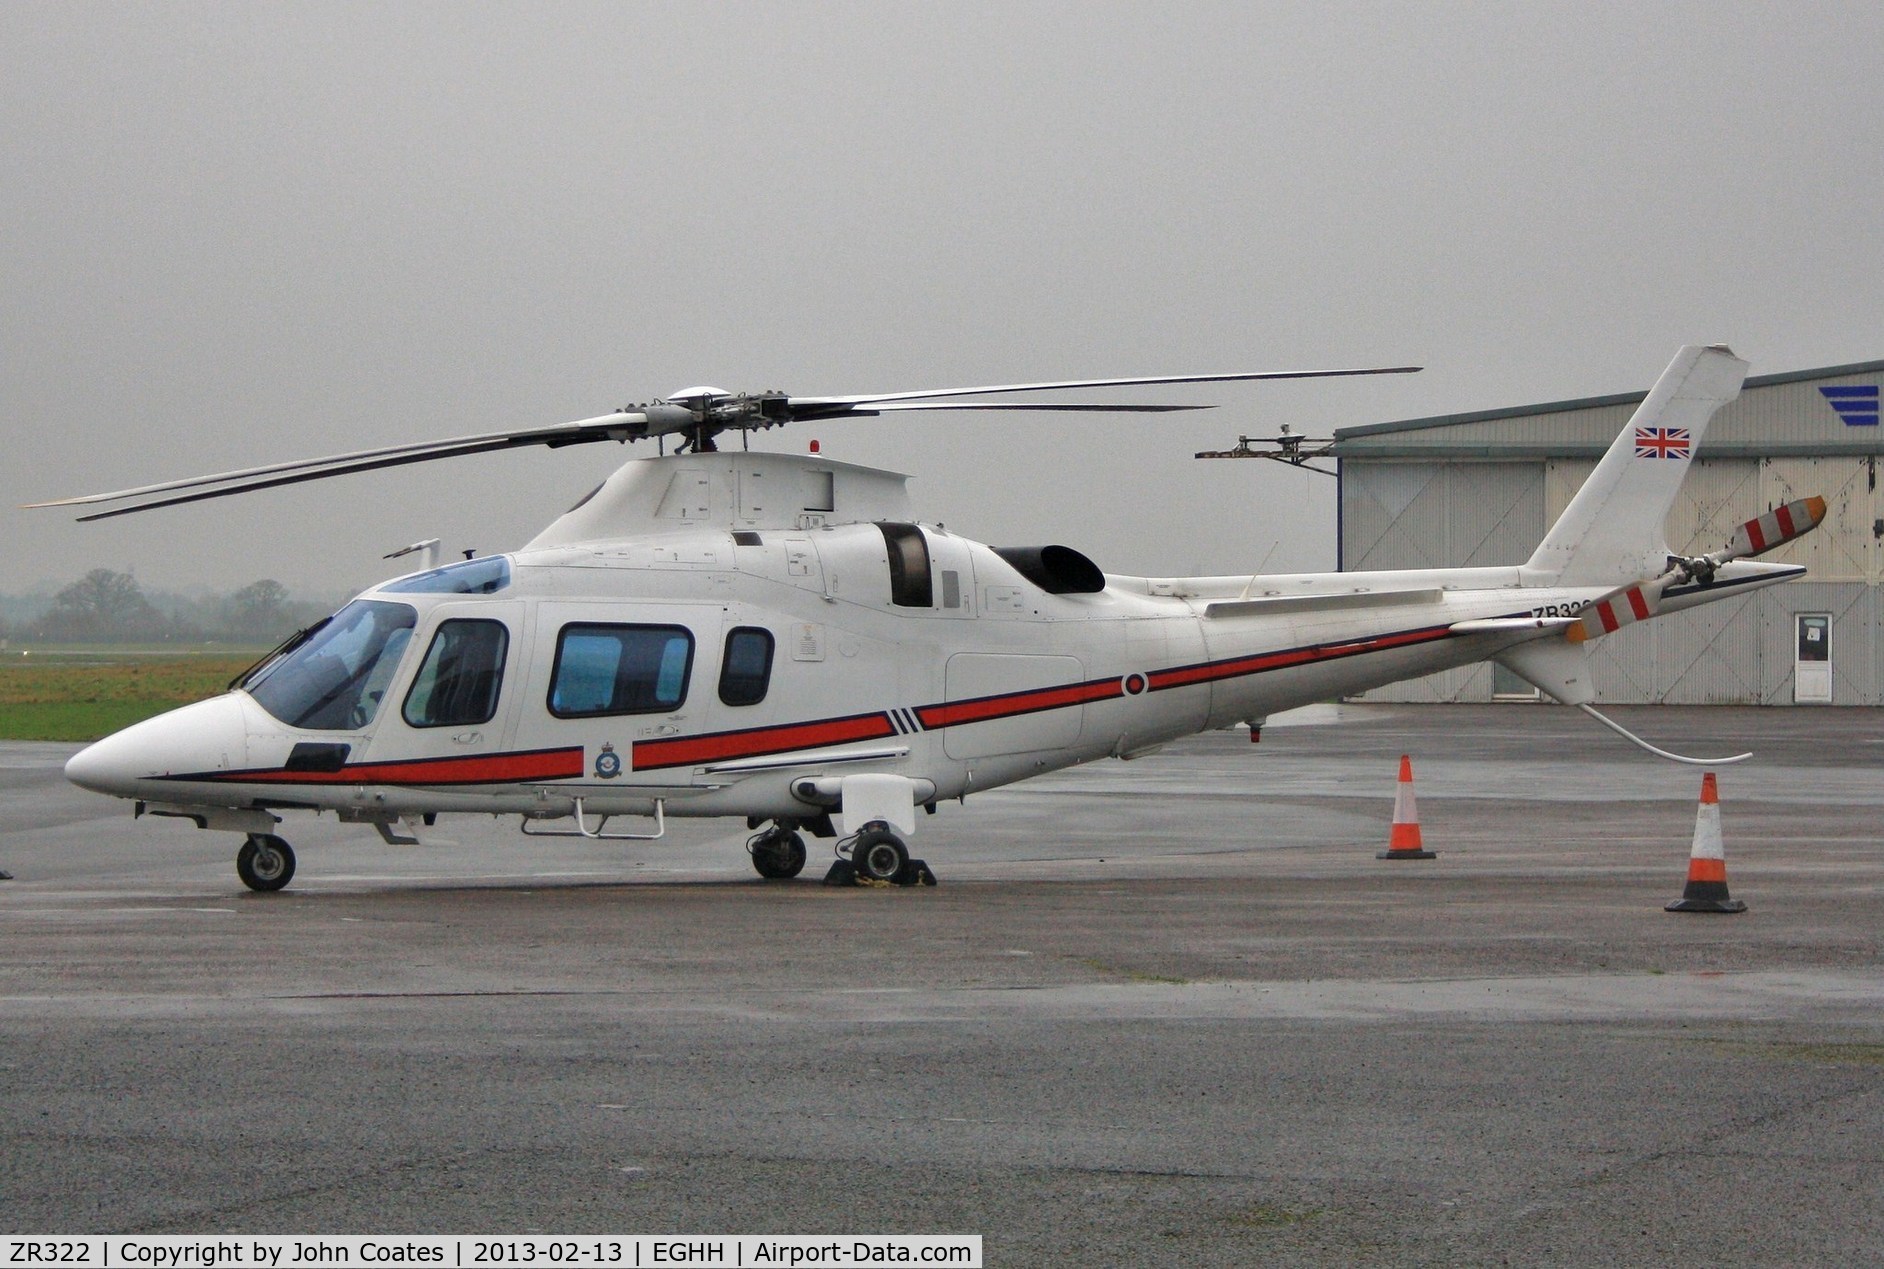 ZR322, 2006 Agusta A-109E Power C/N 11664, Parked at Sigs